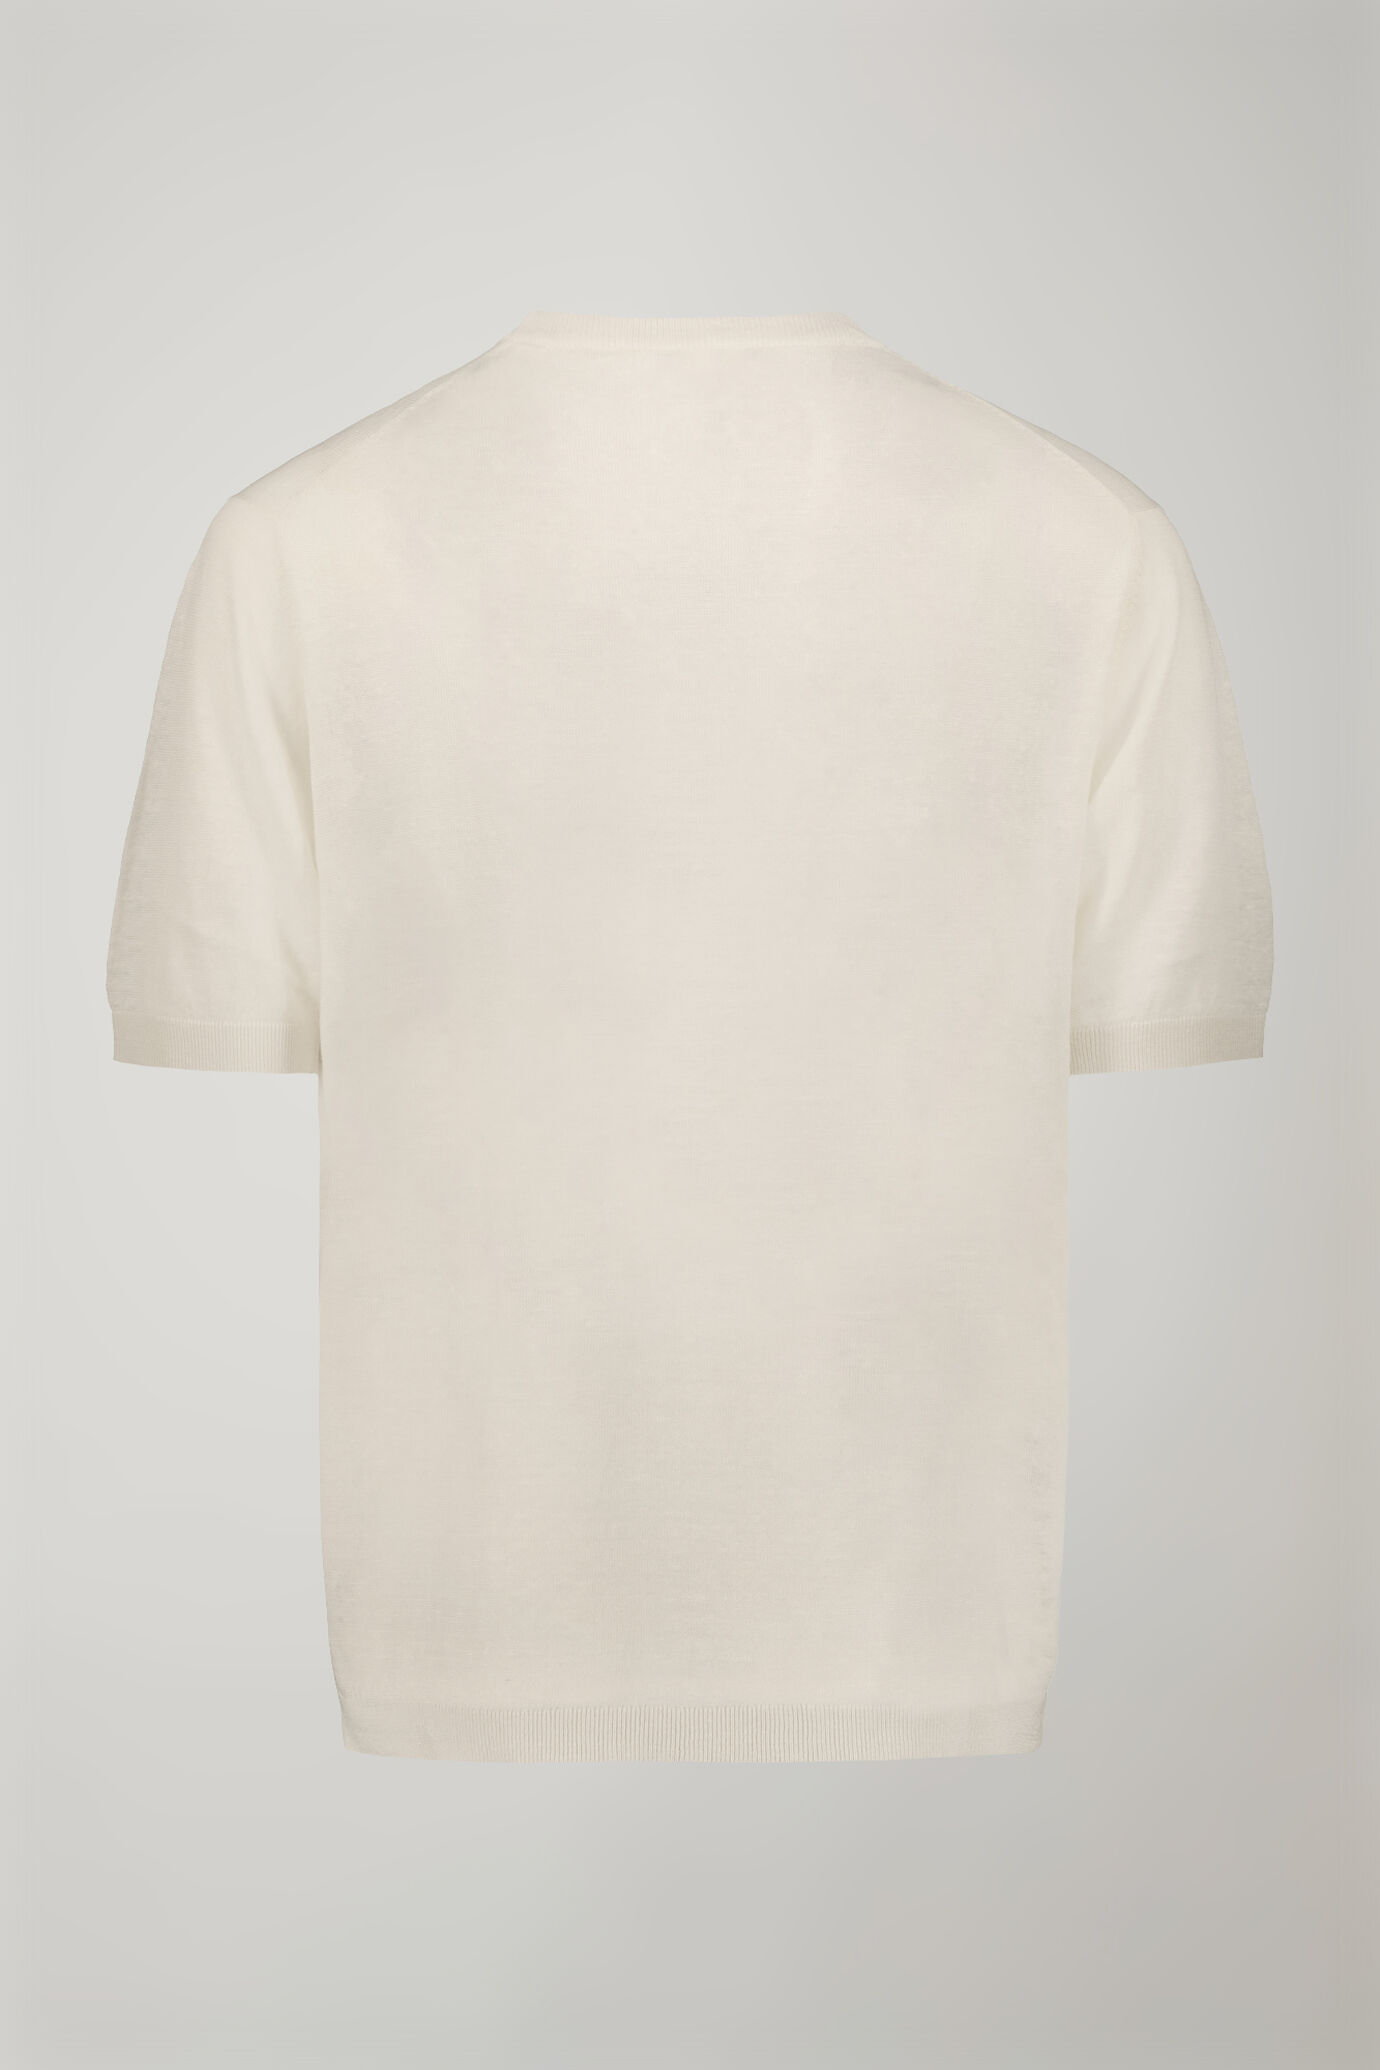 Men's knitted t-shirt 100% linen short-sleeved regular fit image number 5